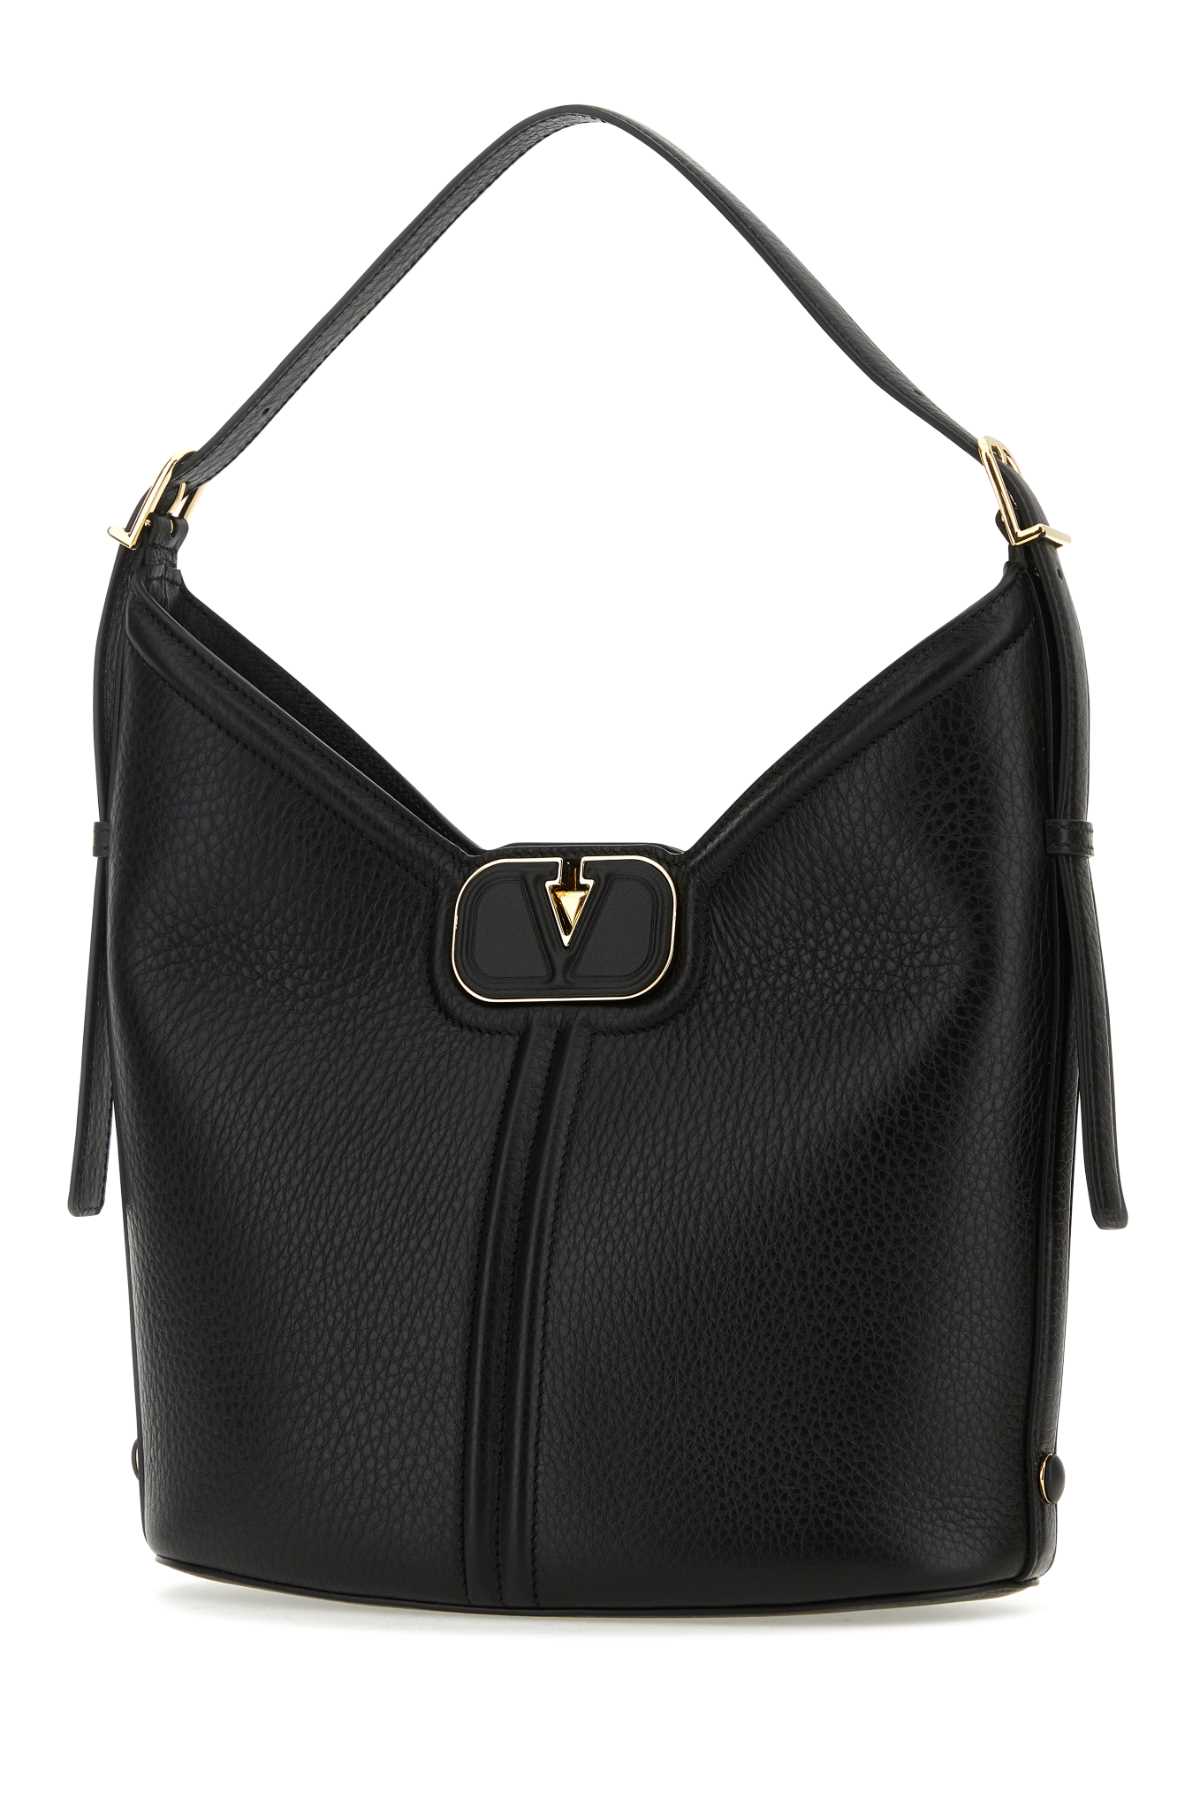 Valentino Garavani Black Leather Vlogo Handbag